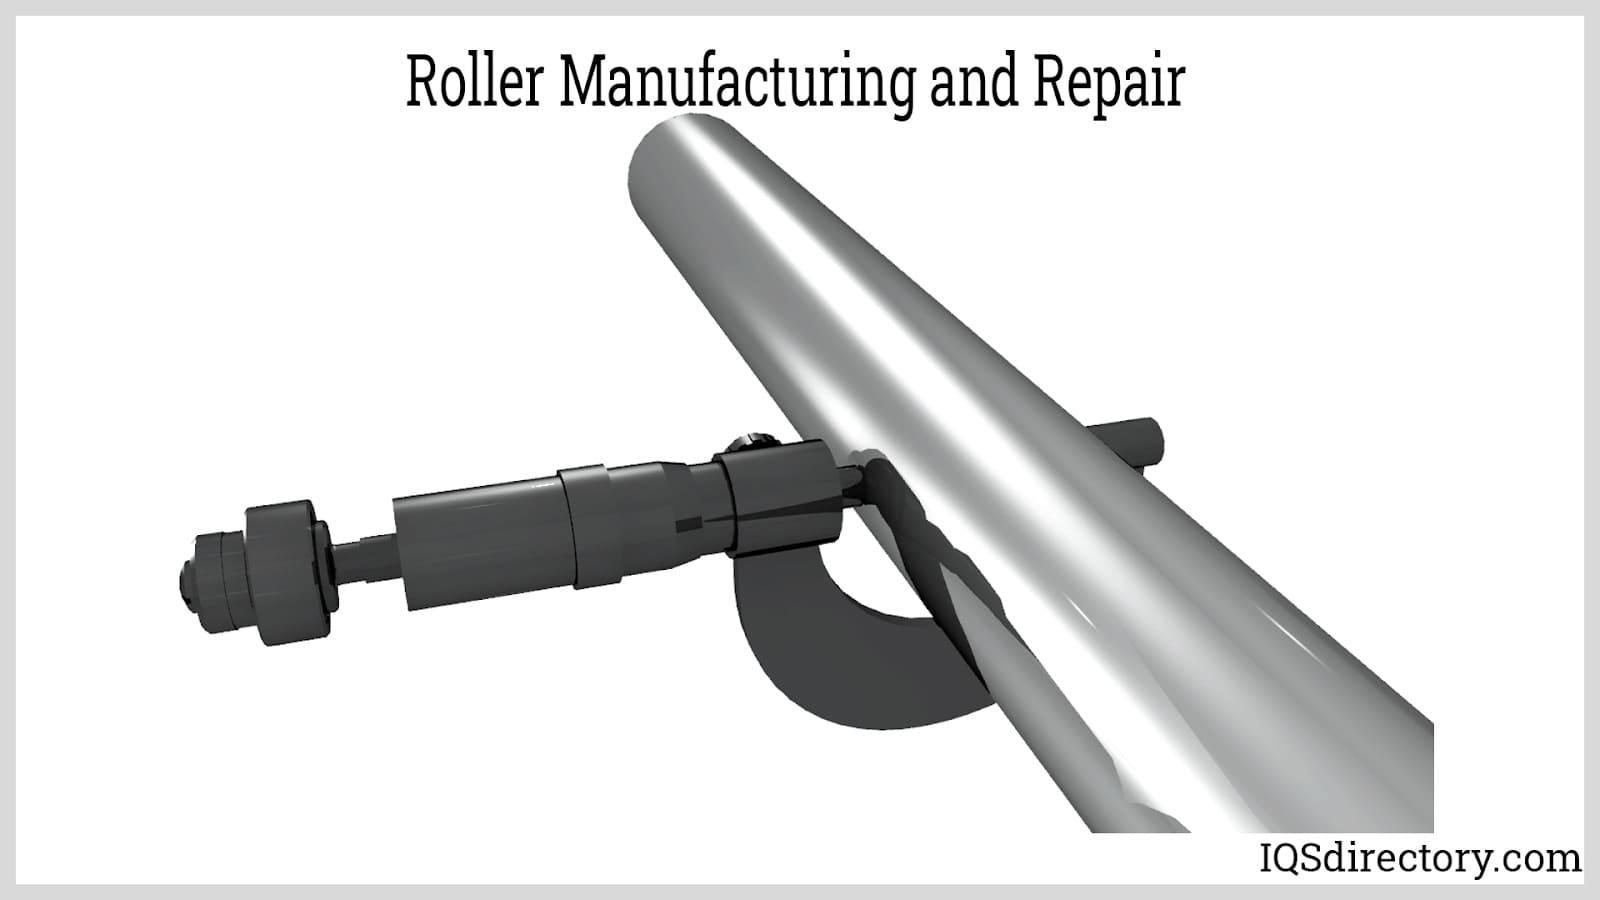 Roller Manufacturing and Repair